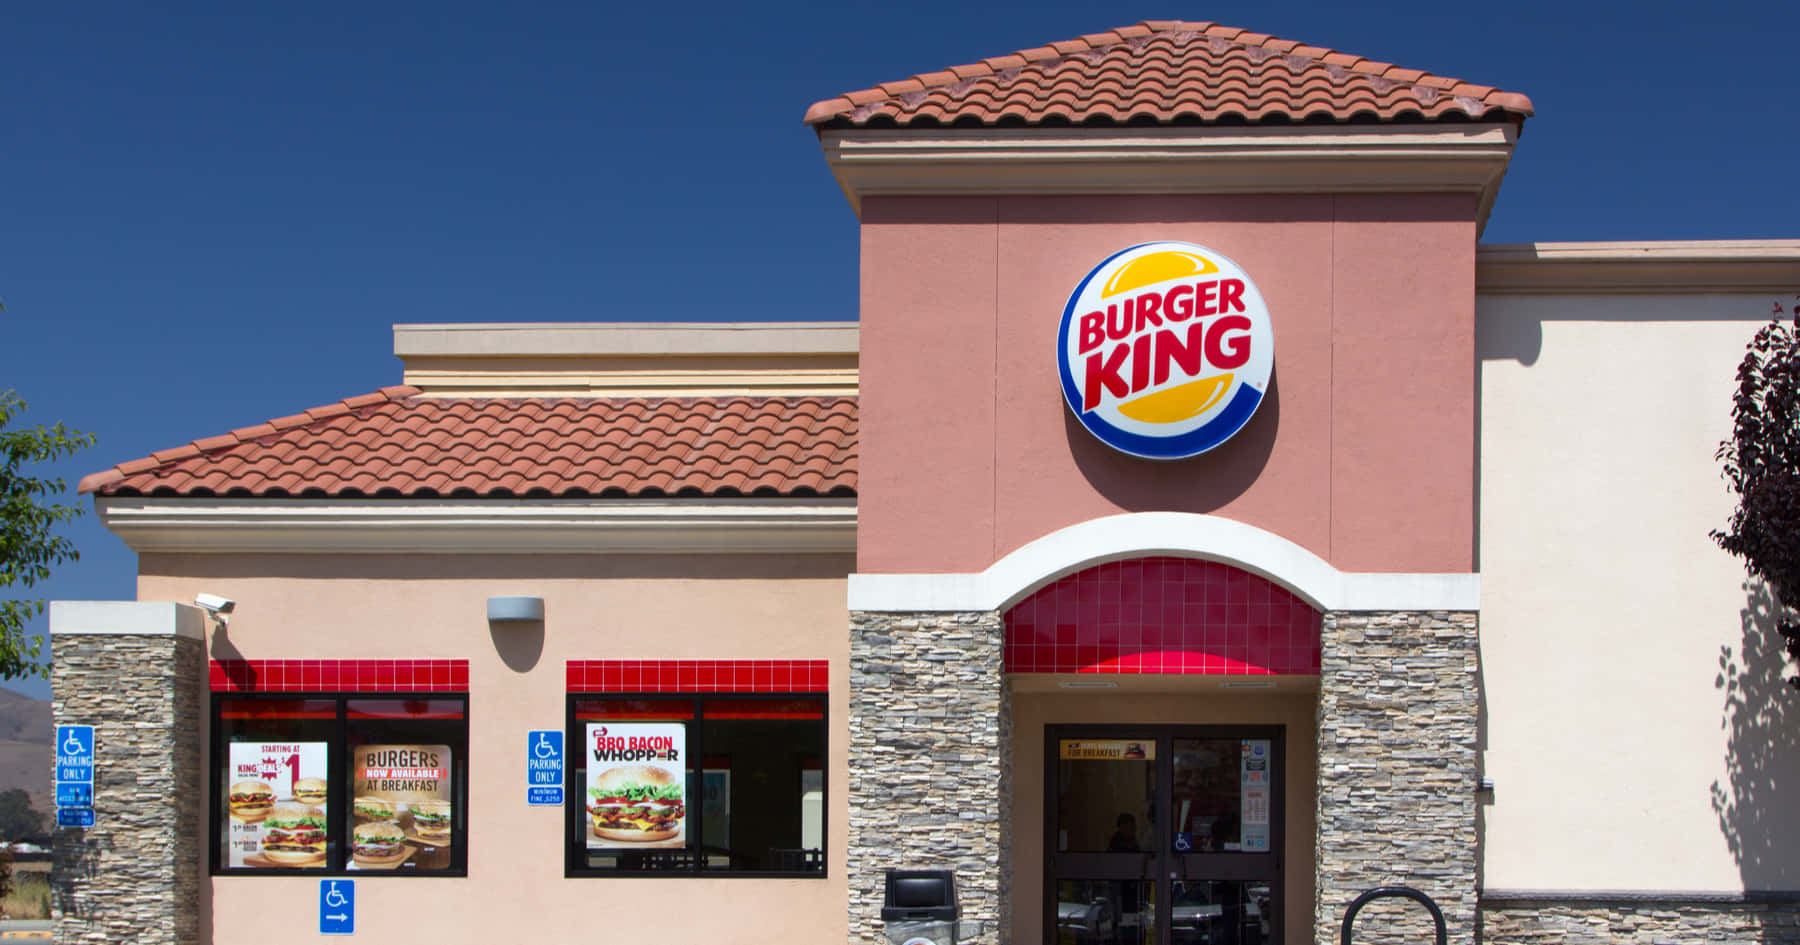 Mmmmmm Burger King – That's That Great Taste